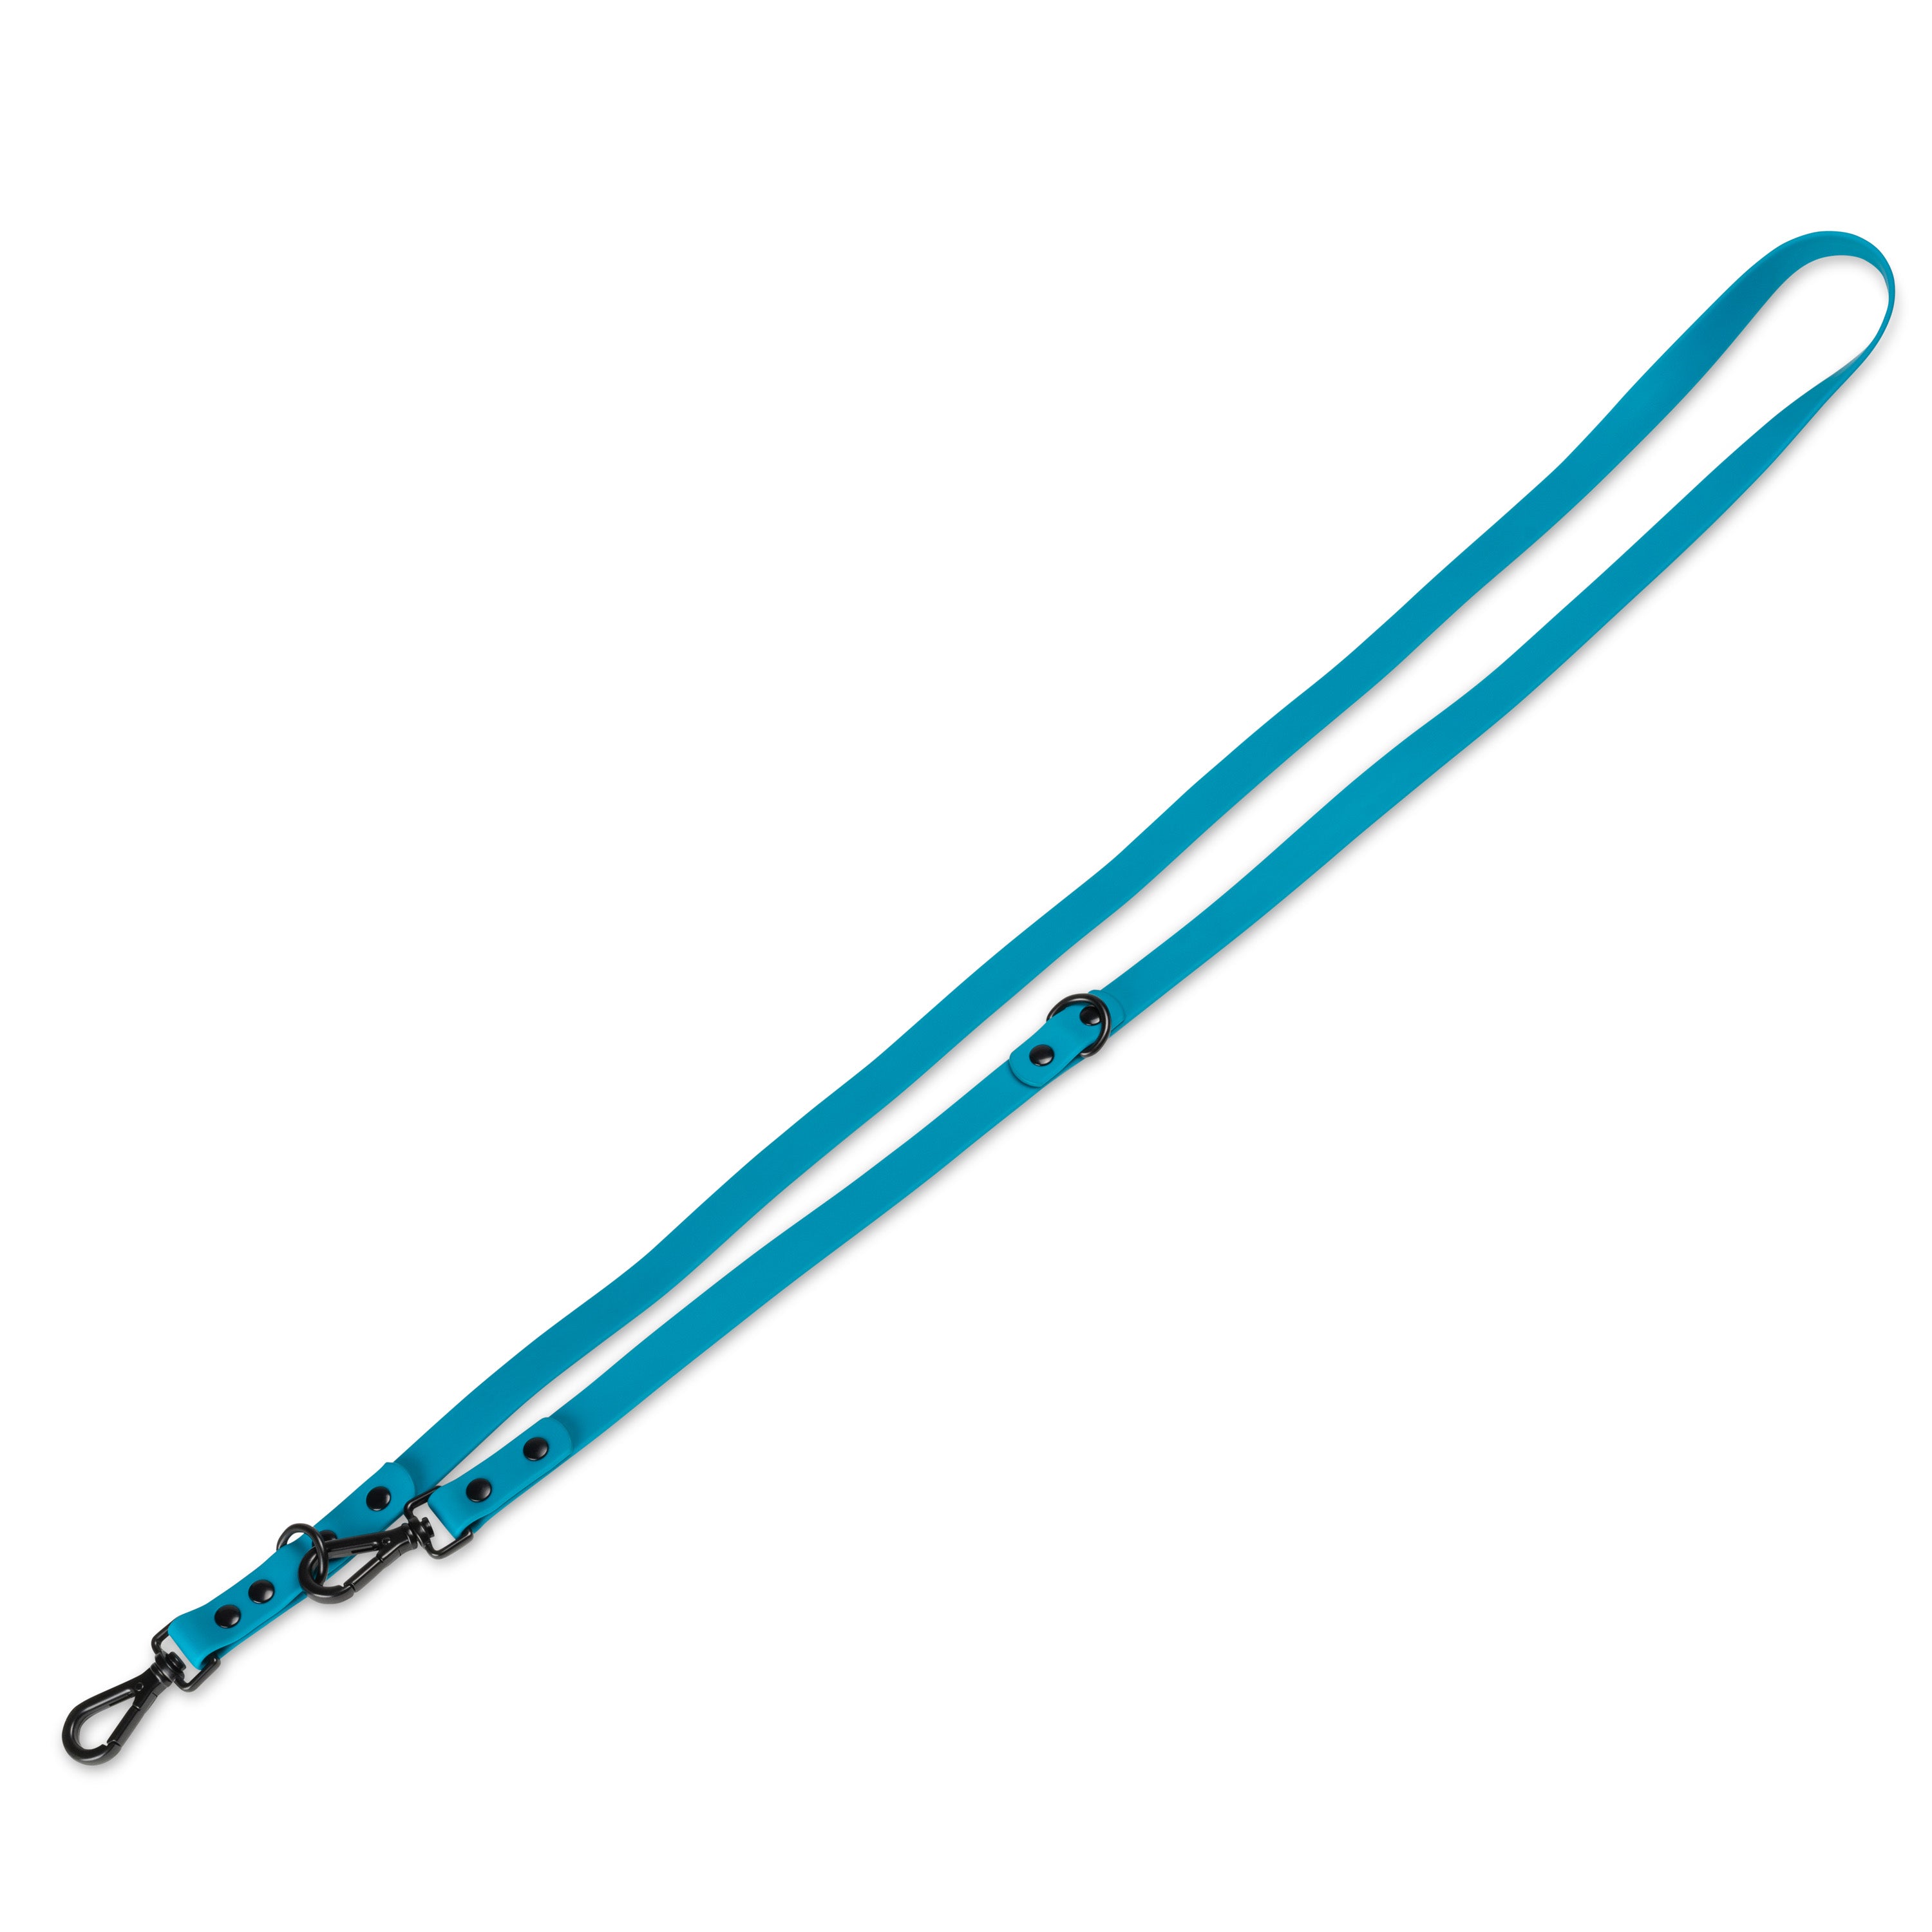 The Modern Dog Company - Retro Blue Adjustable Leash